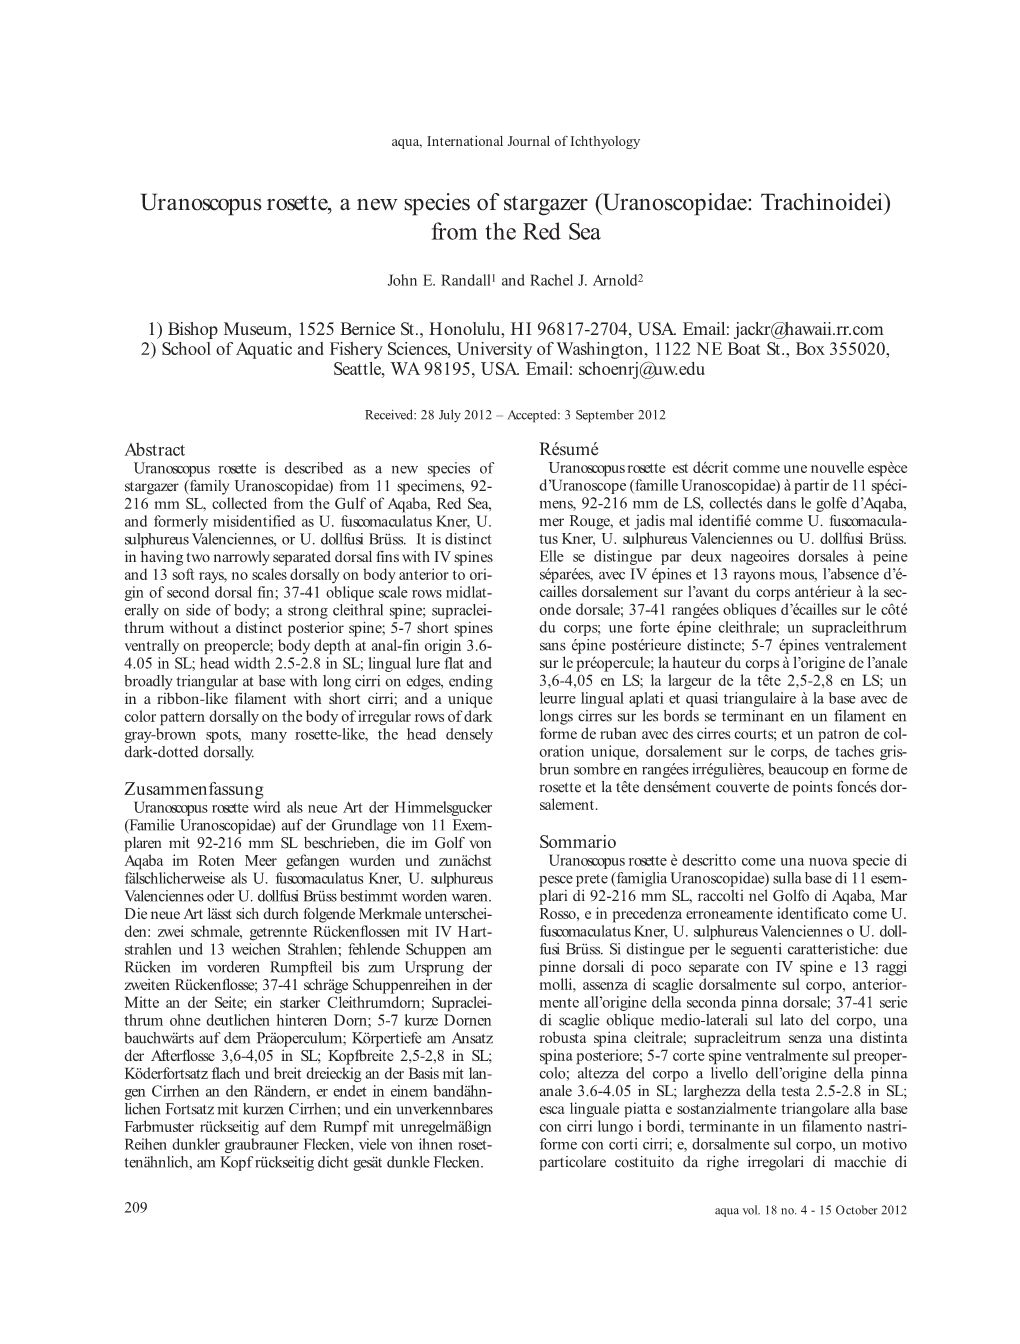 Uranoscopus Rosette, a New Species of Stargazer (Uranoscopidae: Trachinoidei) from the Red Sea